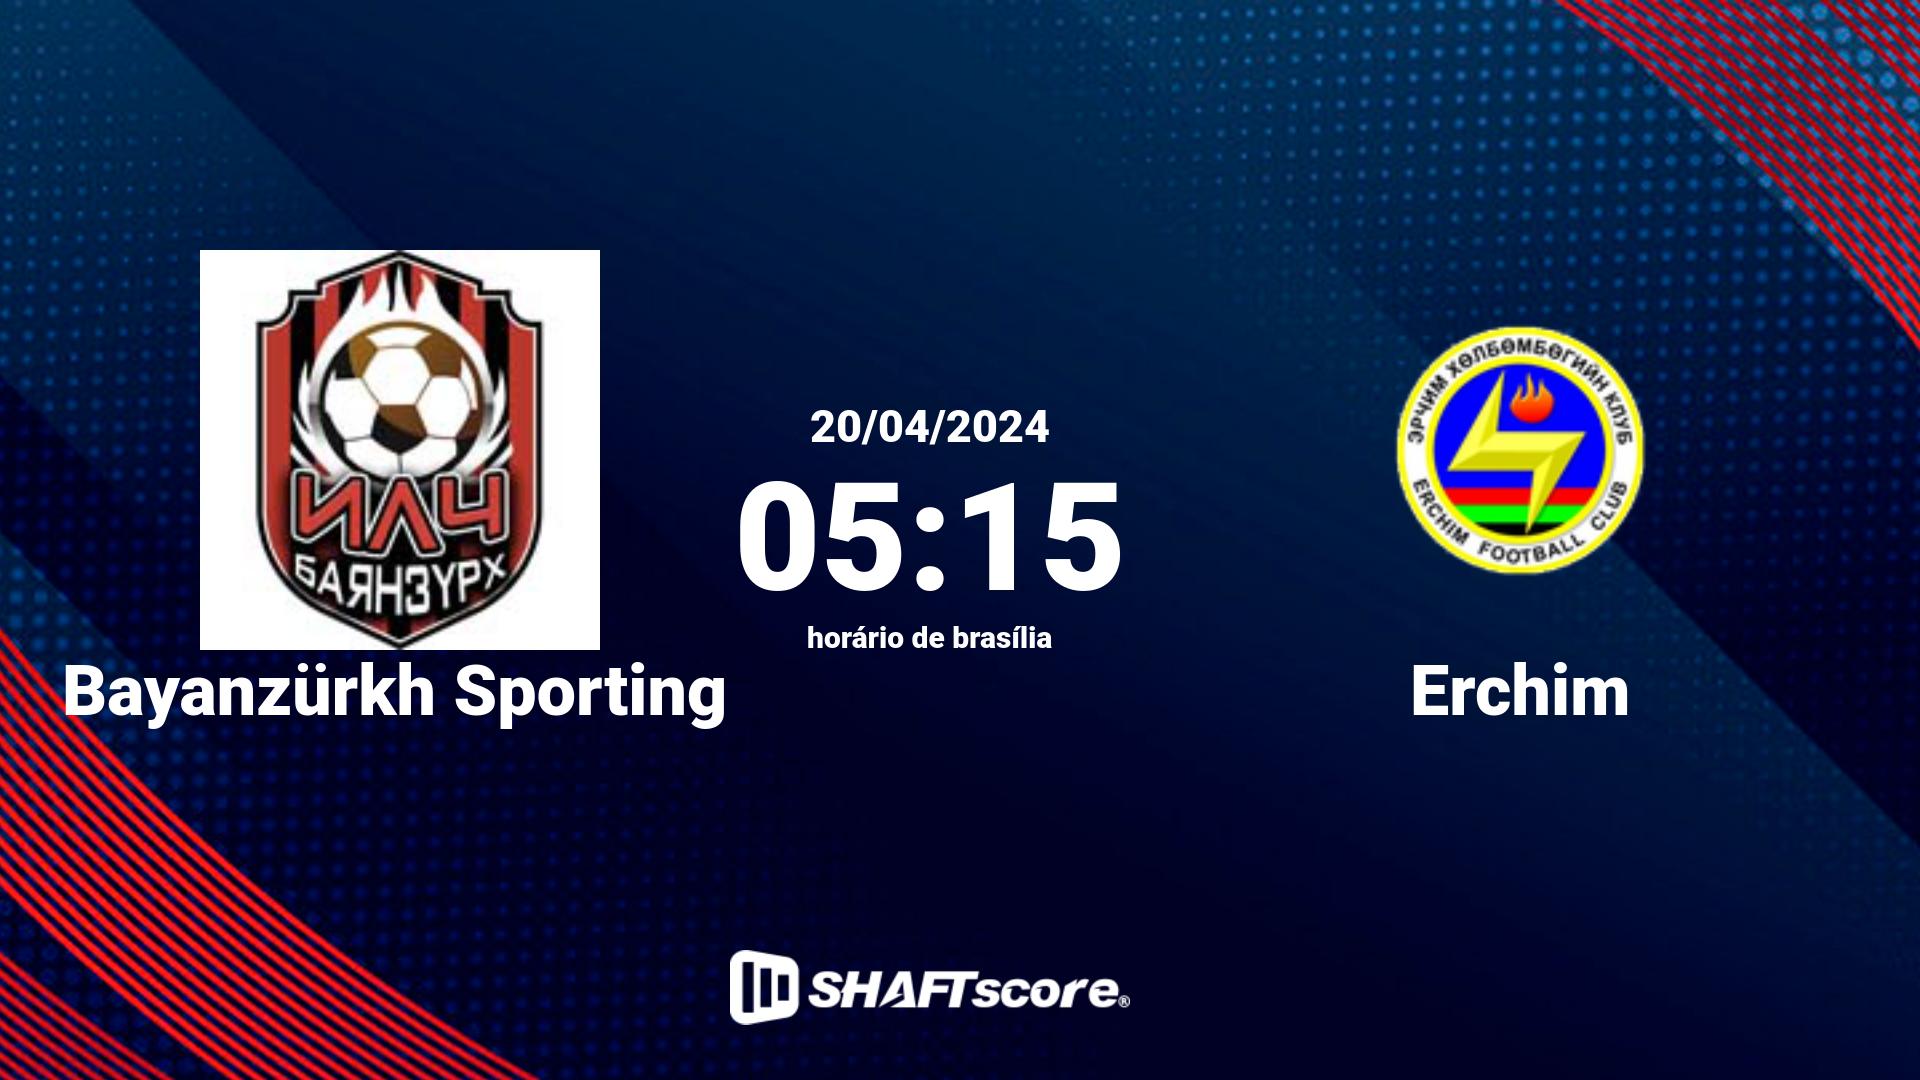 Estatísticas do jogo Bayanzürkh Sporting vs Erchim 20.04 05:15